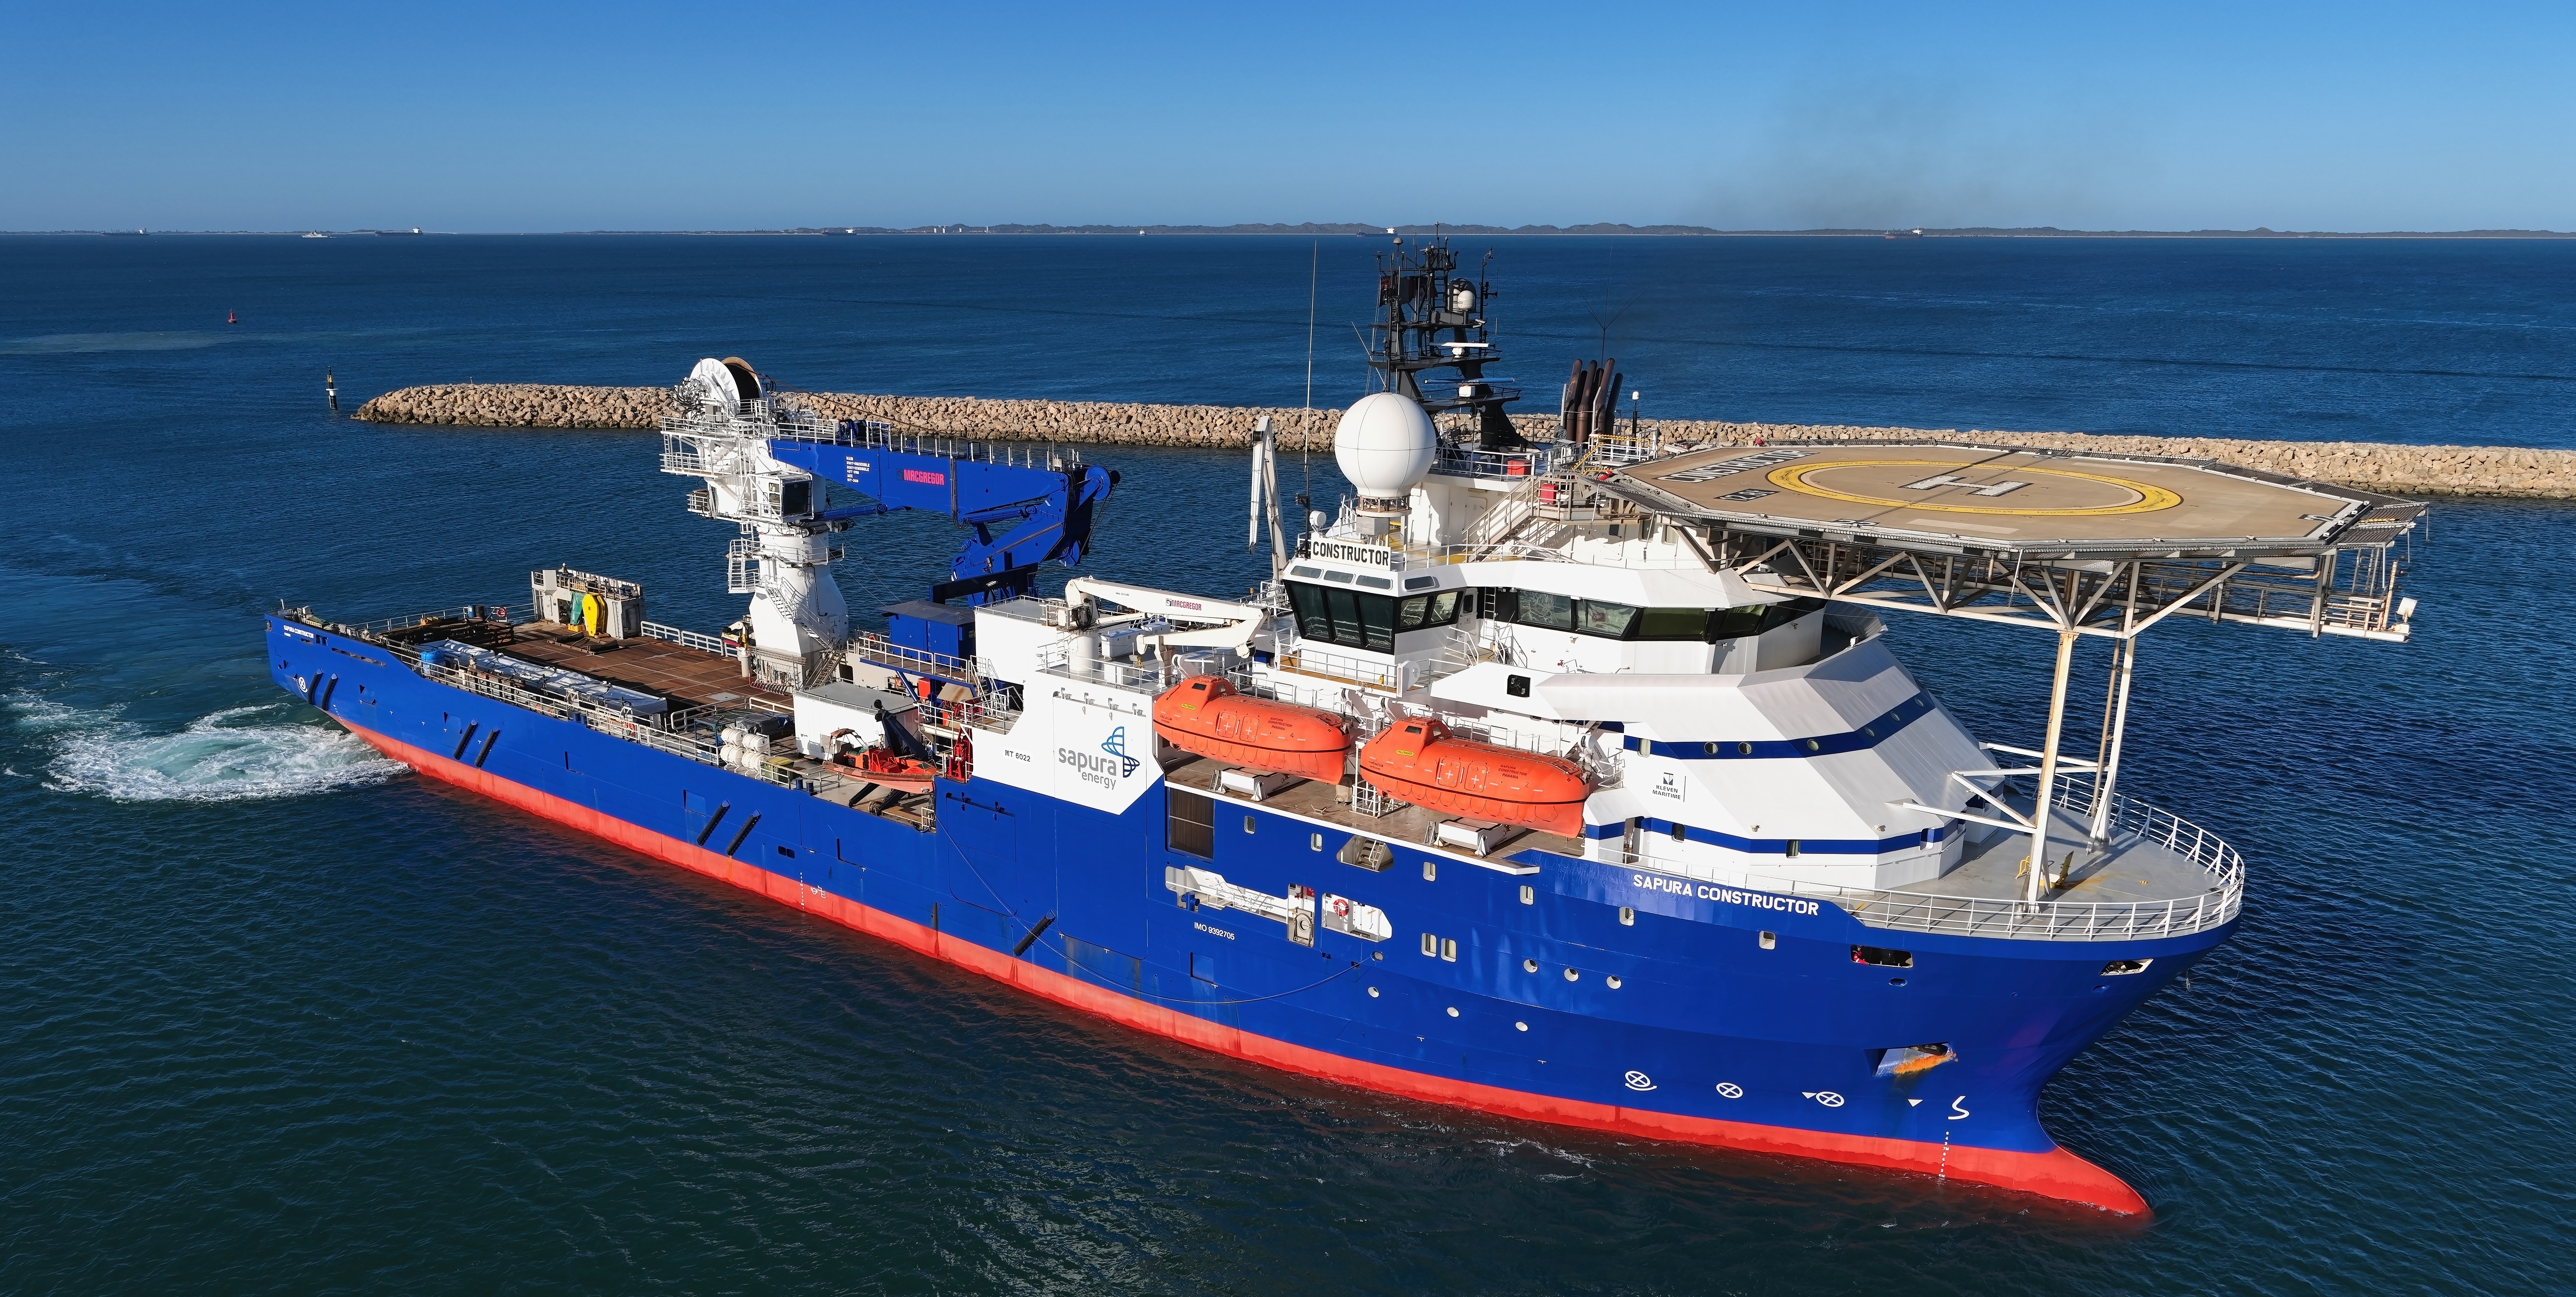 Photograph of the 117m construction support vessel, Sapura Constructor.